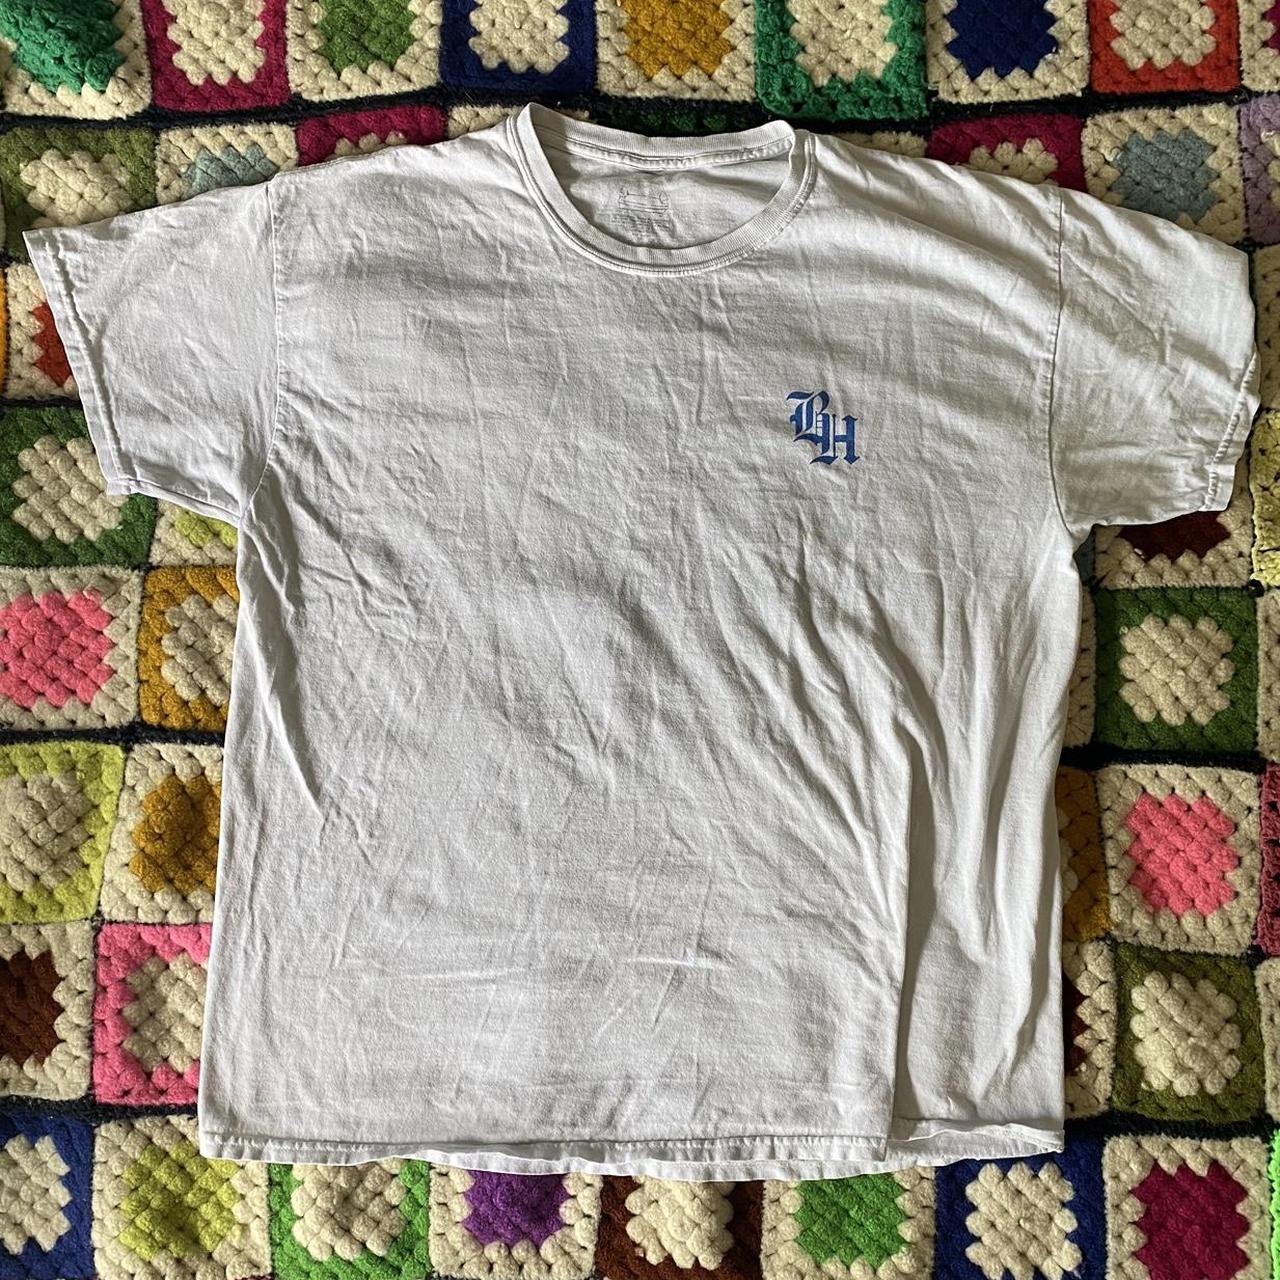 Brockhampton Men's White and Blue T-shirt (2)